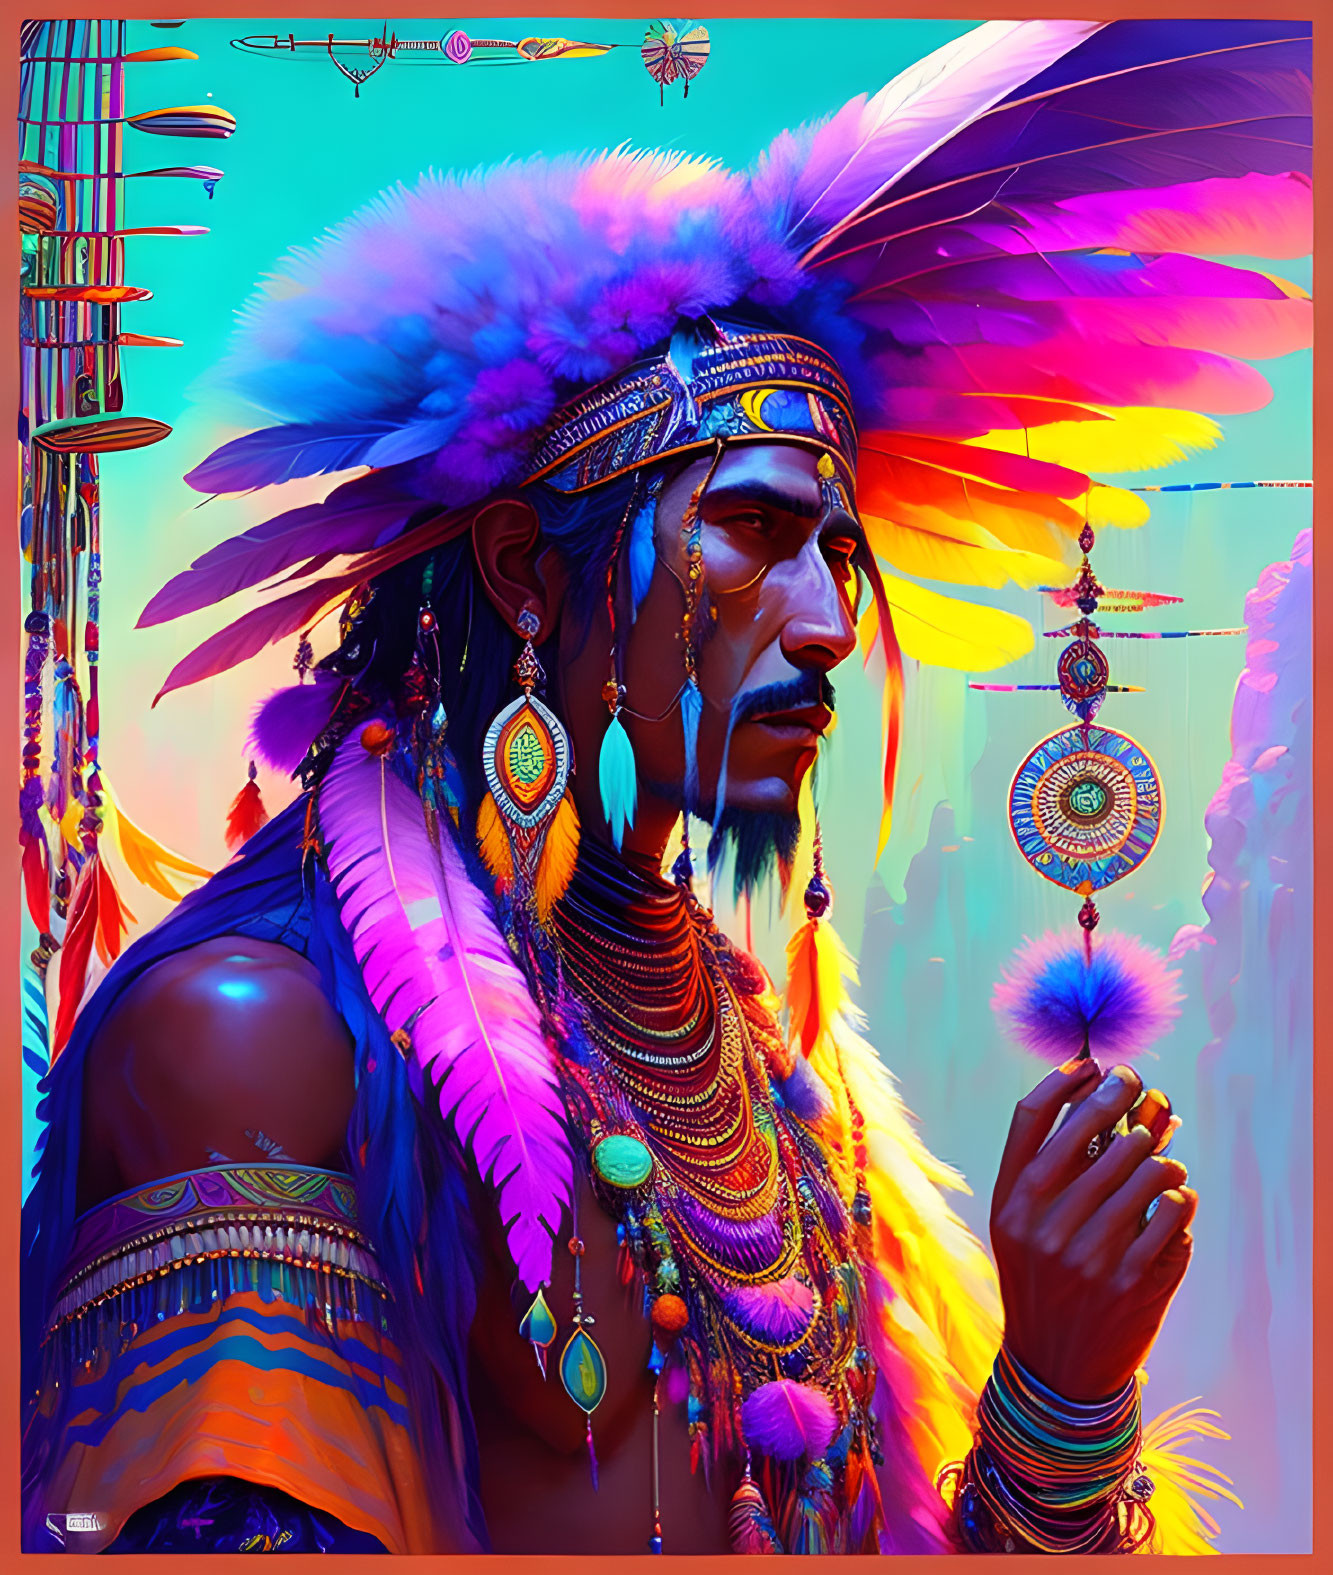 Vibrant Native American figure in traditional attire with spiritual aura